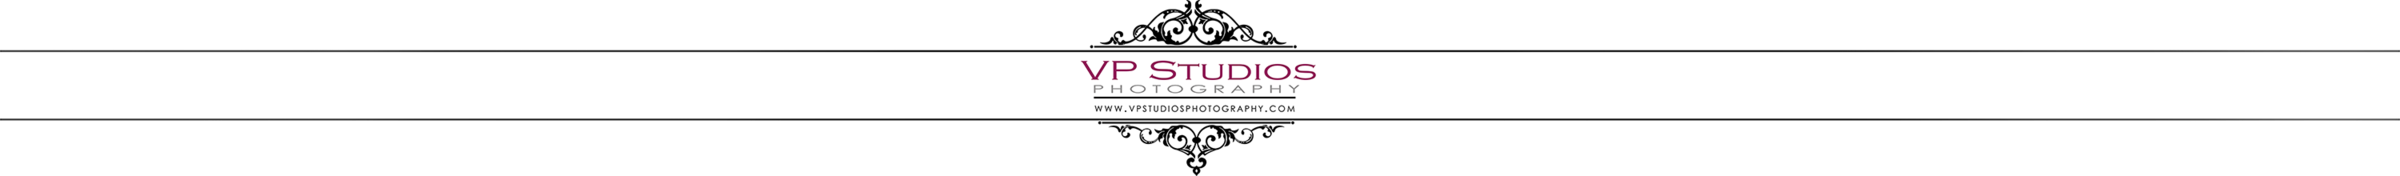 VP Studios - Logo_Large_WEB